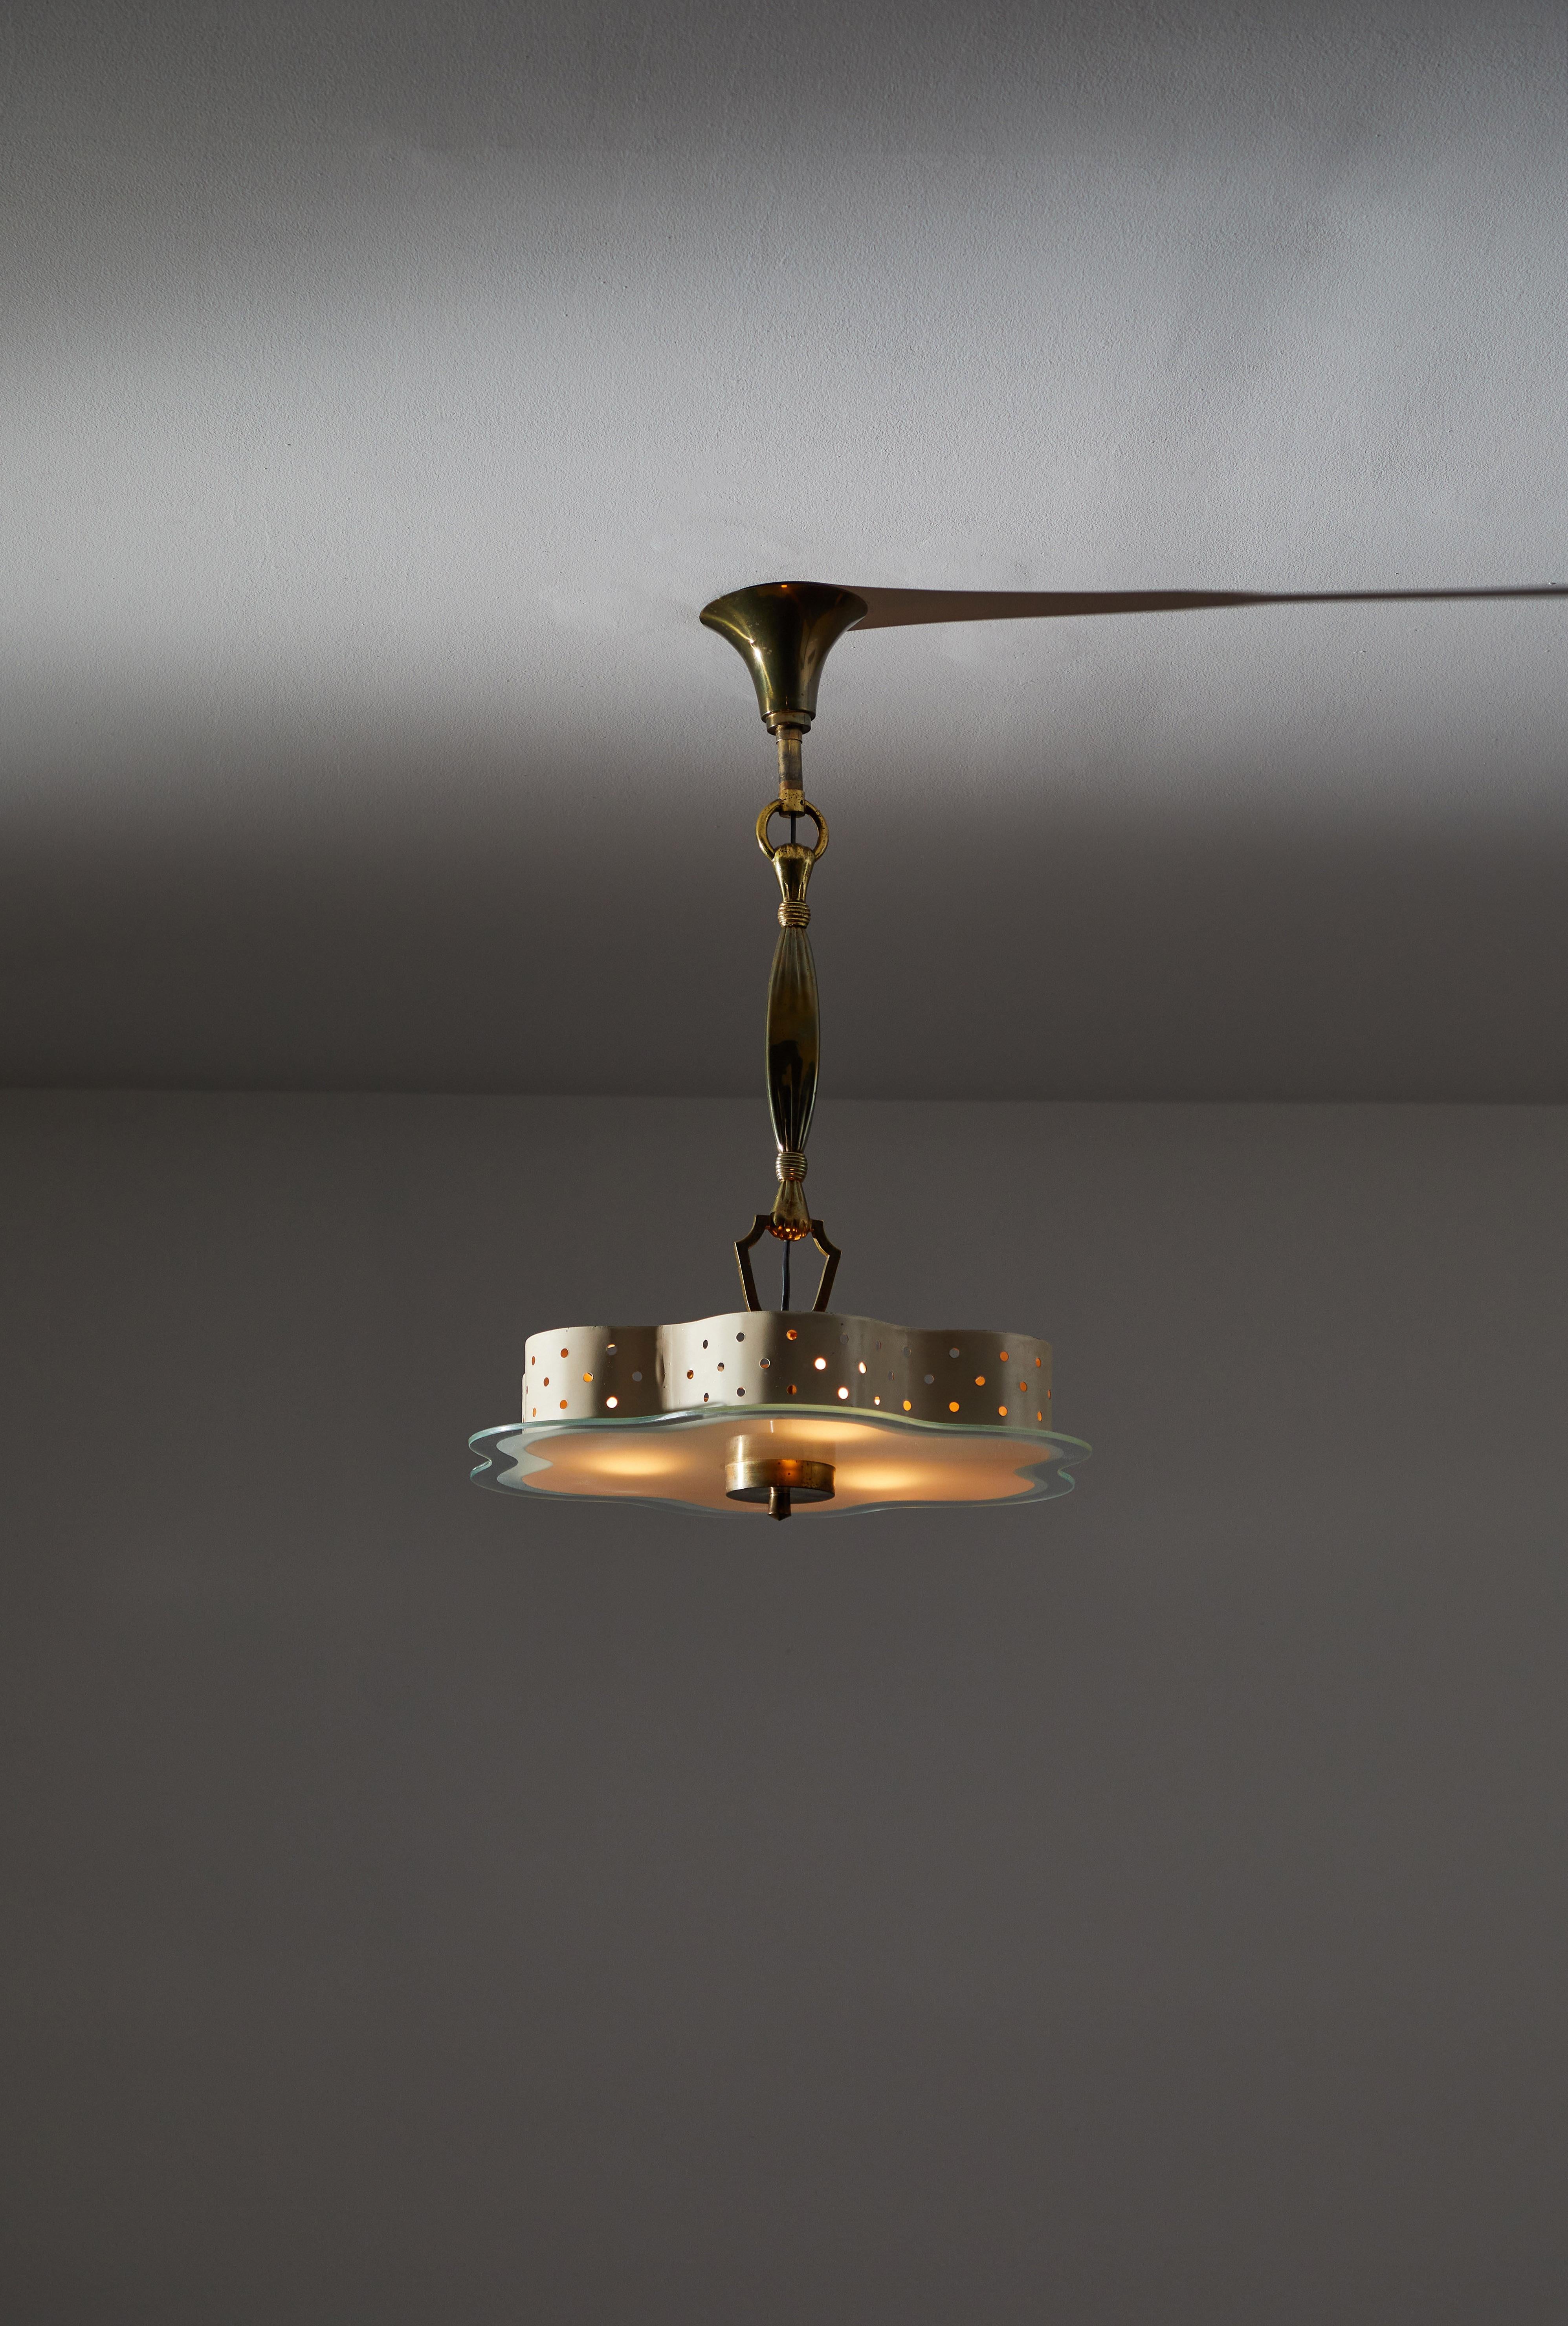 Mid-Century Modern Suspension Light by Lunel